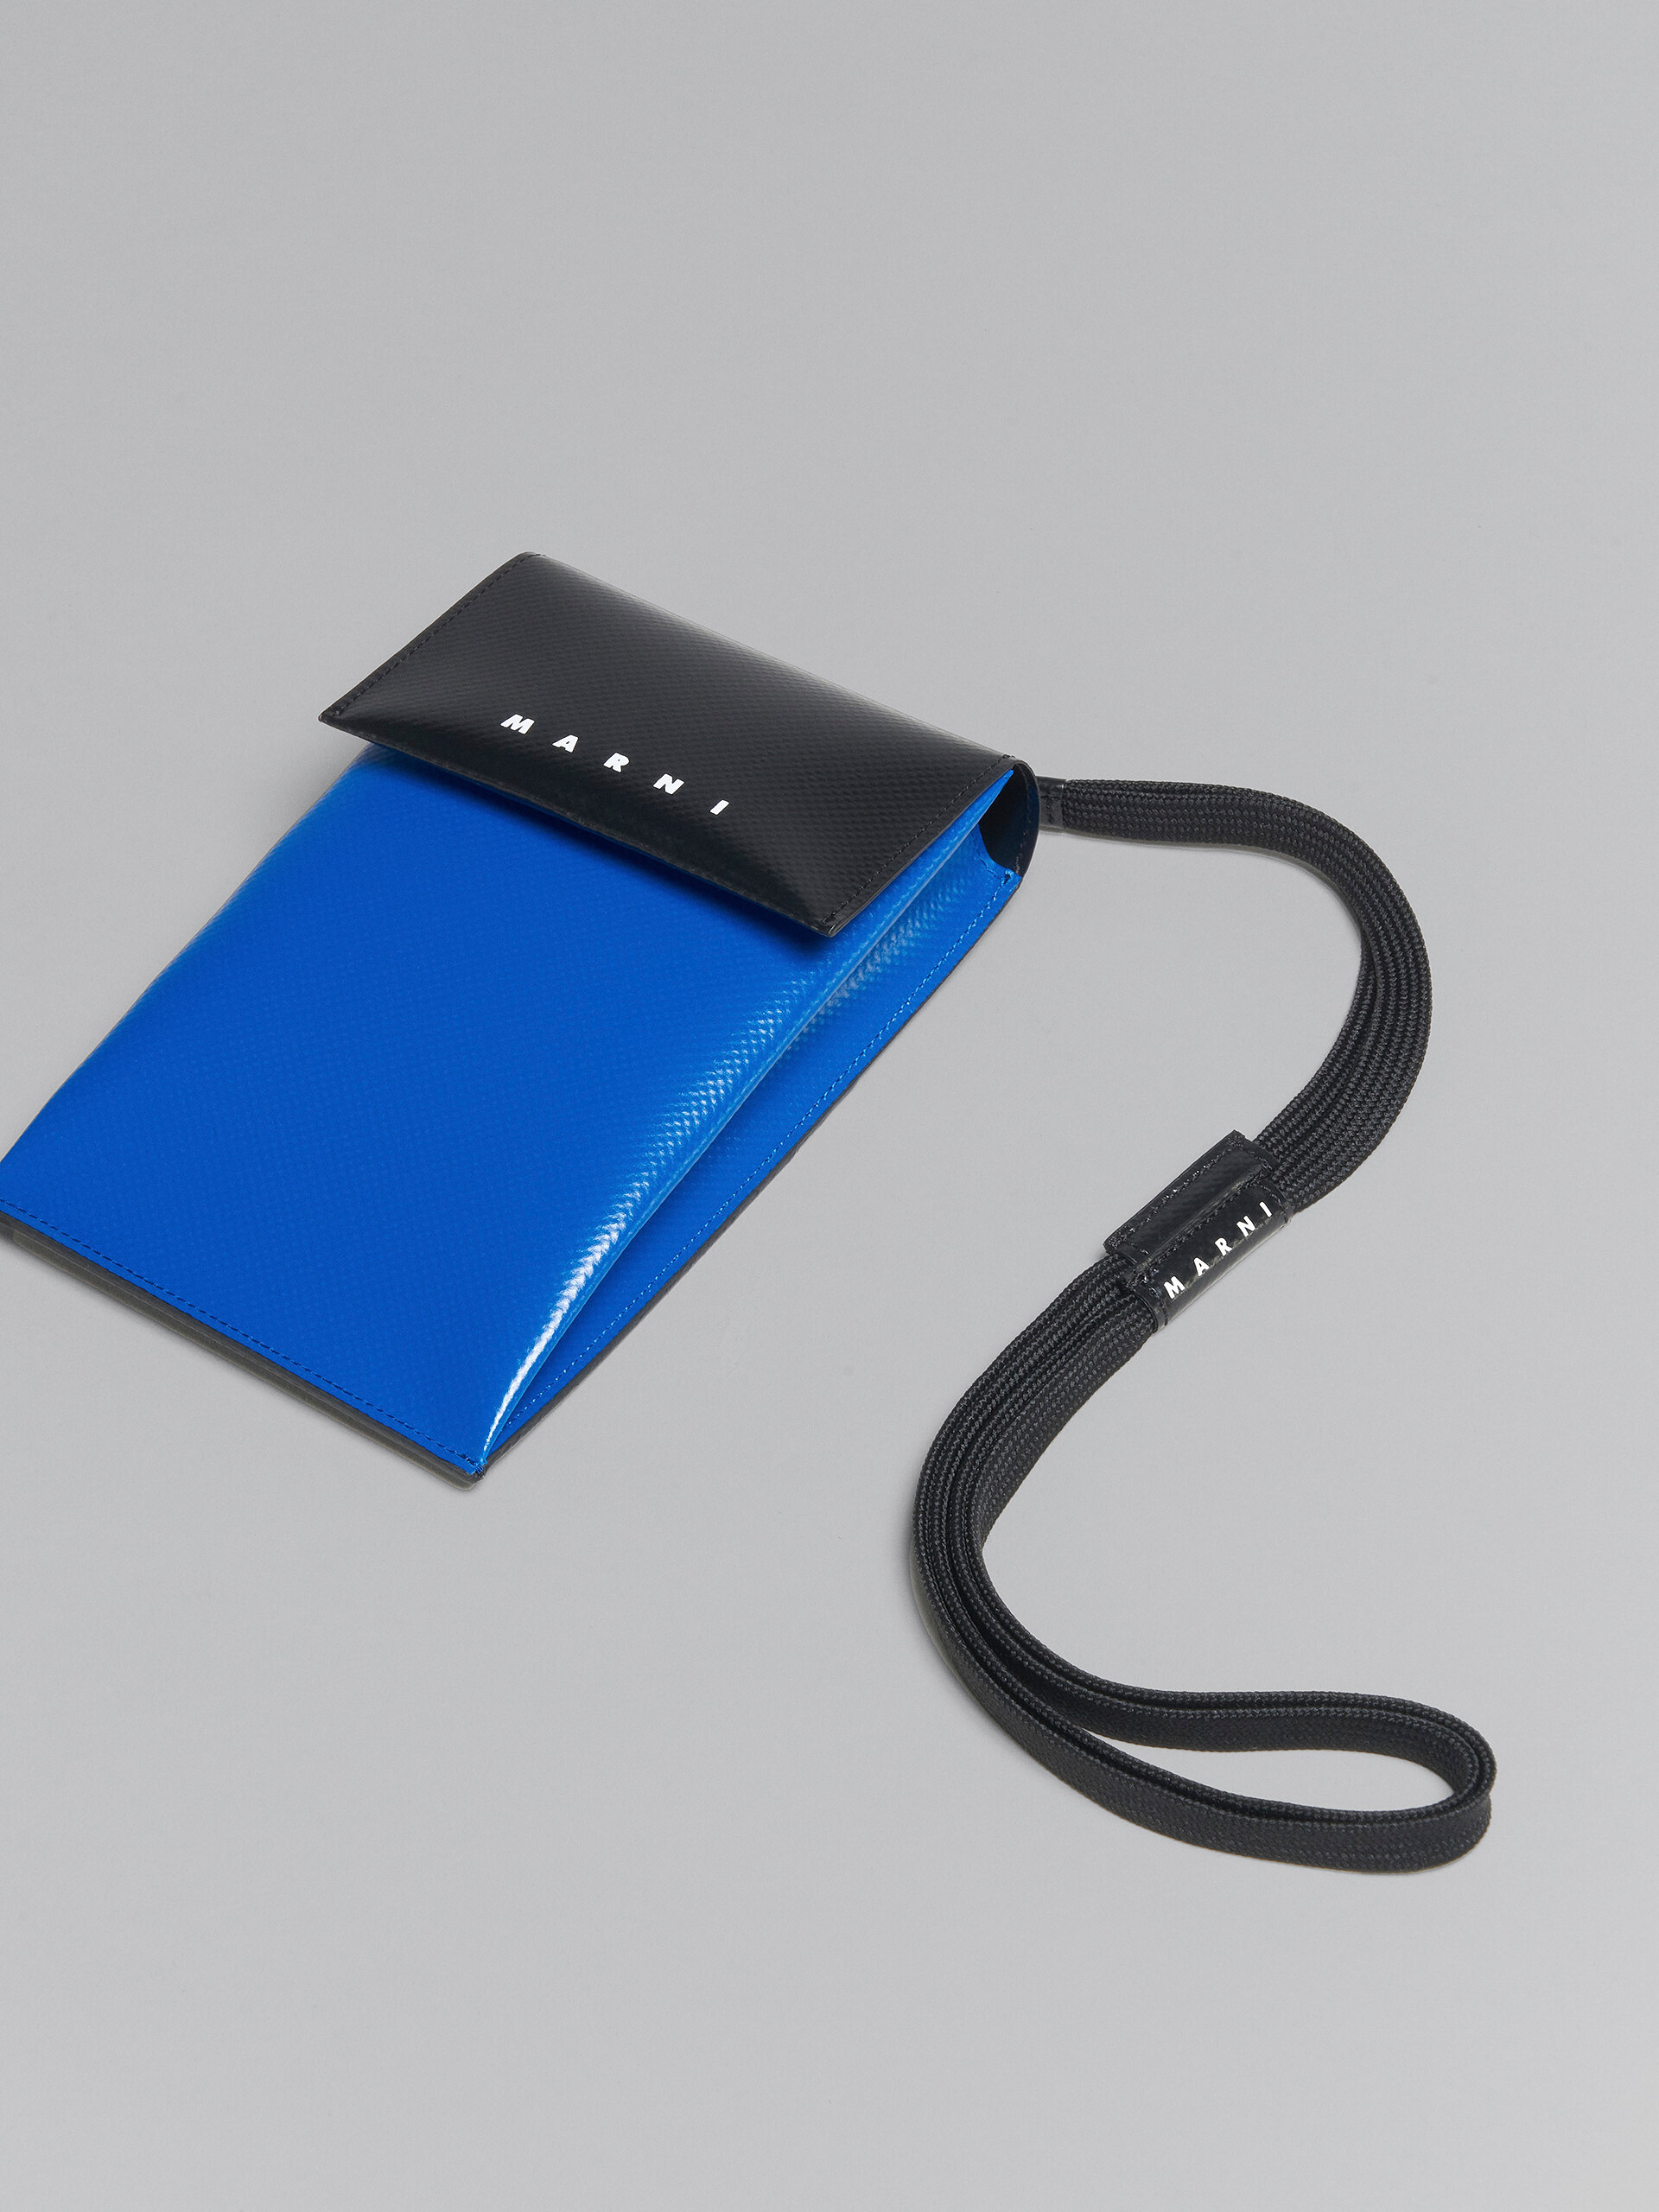 Tribeca blue and black phone case